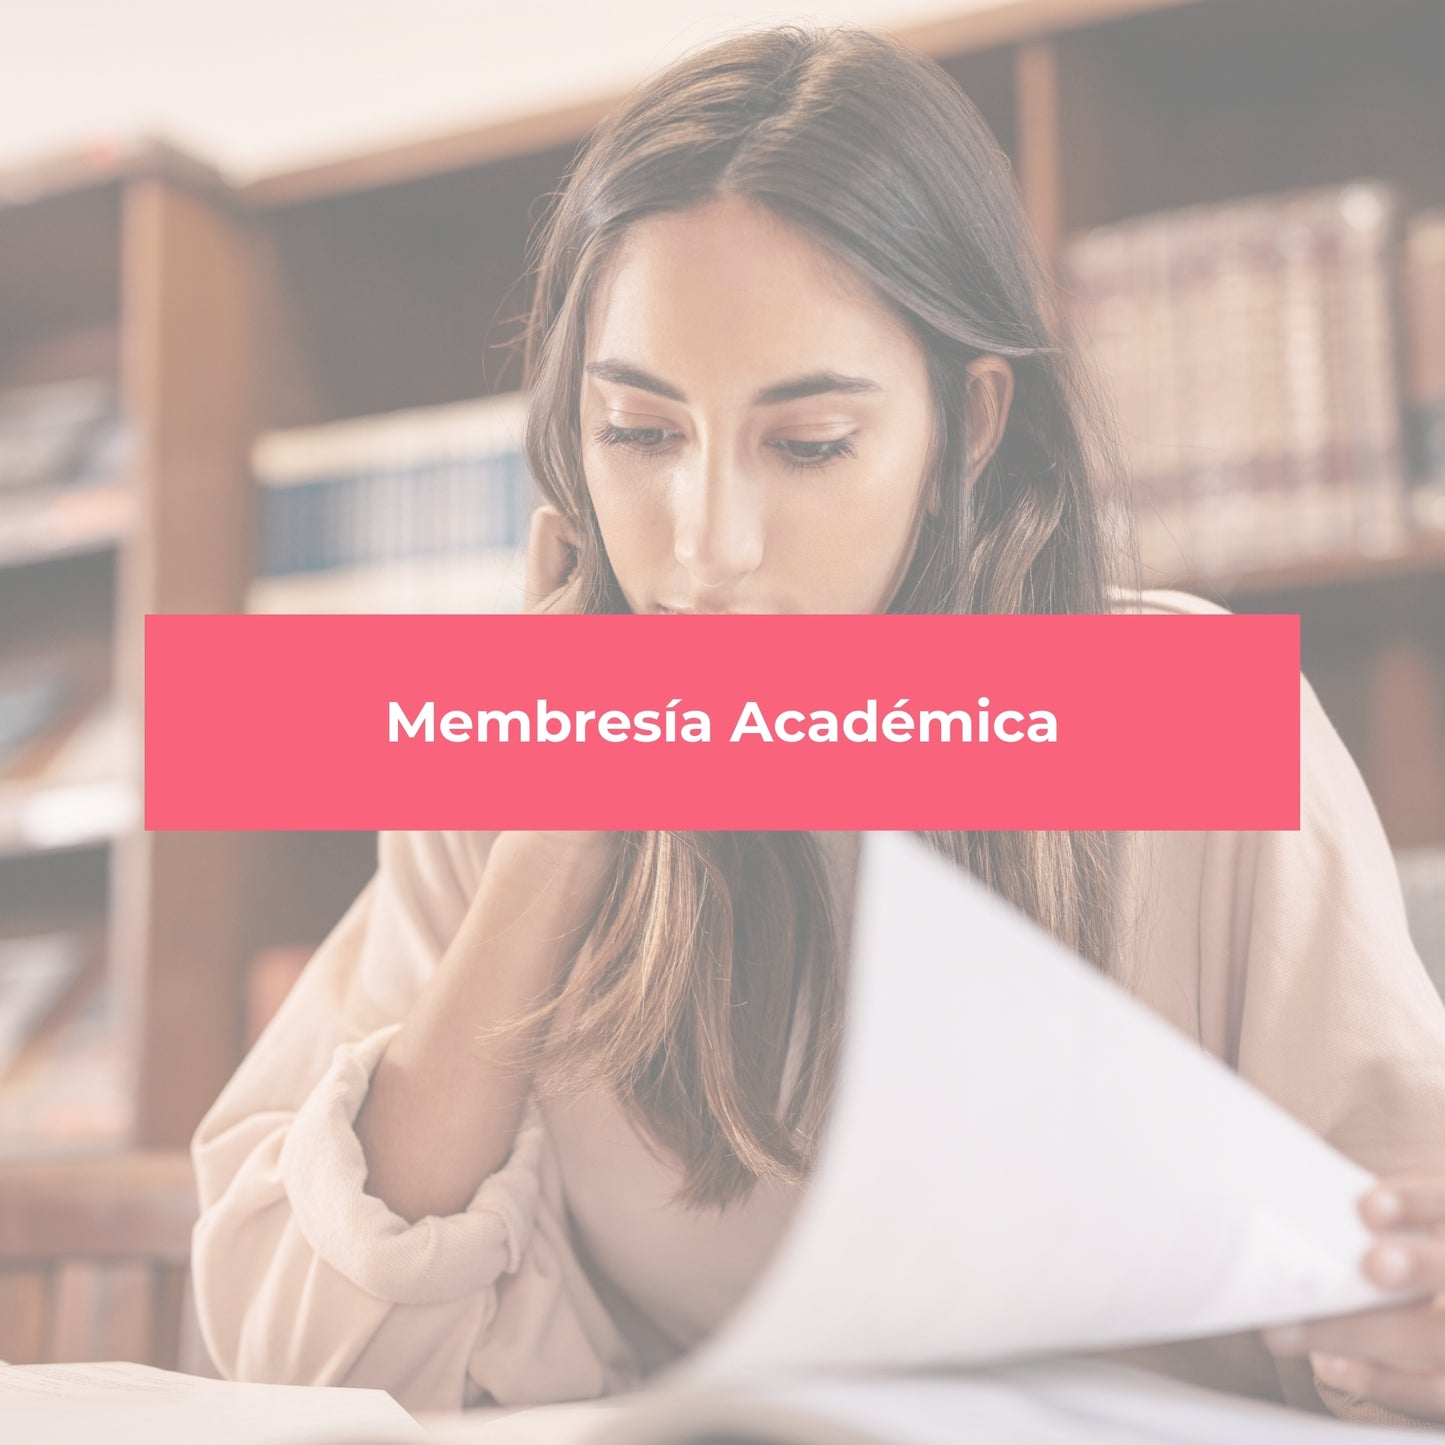 Membresía Académica